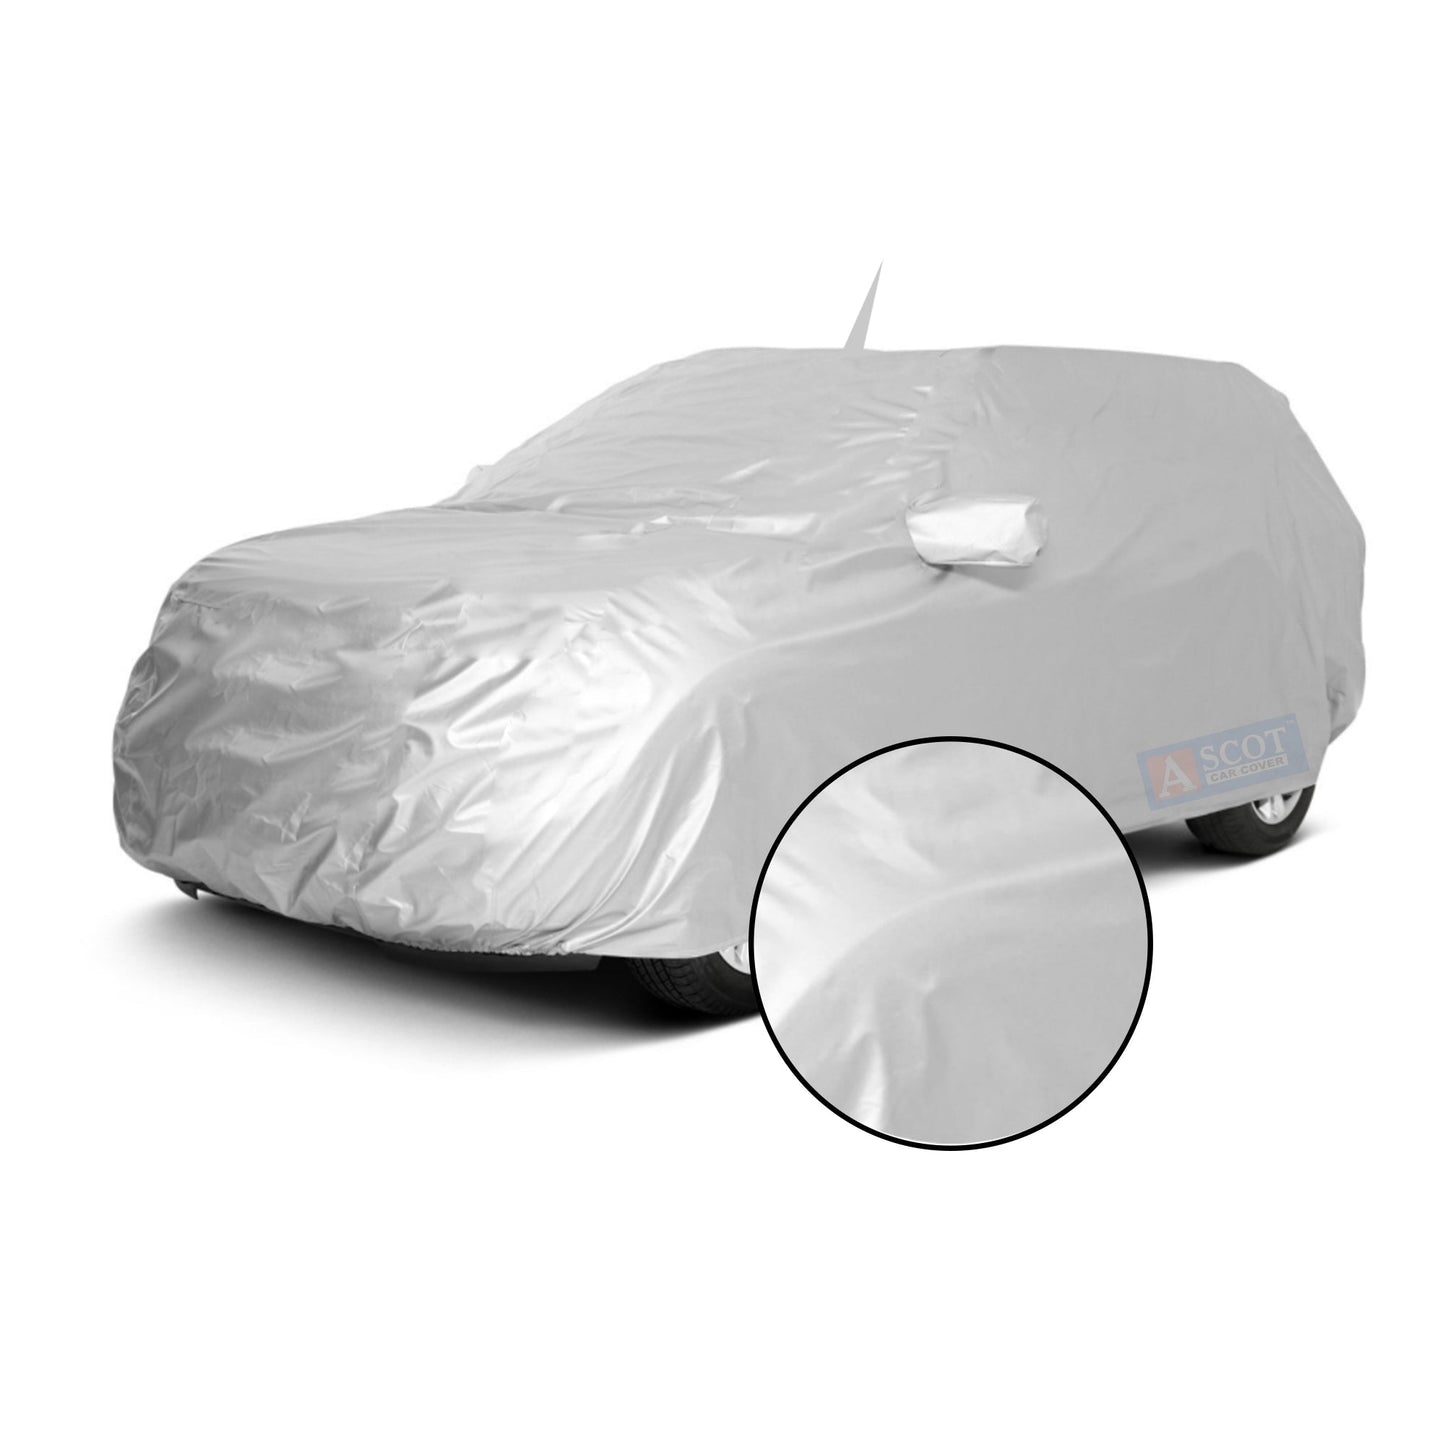 Ascot Audi Q5 2008-2017 Model Car Body Cover Dust Proof, Trippel Stitched